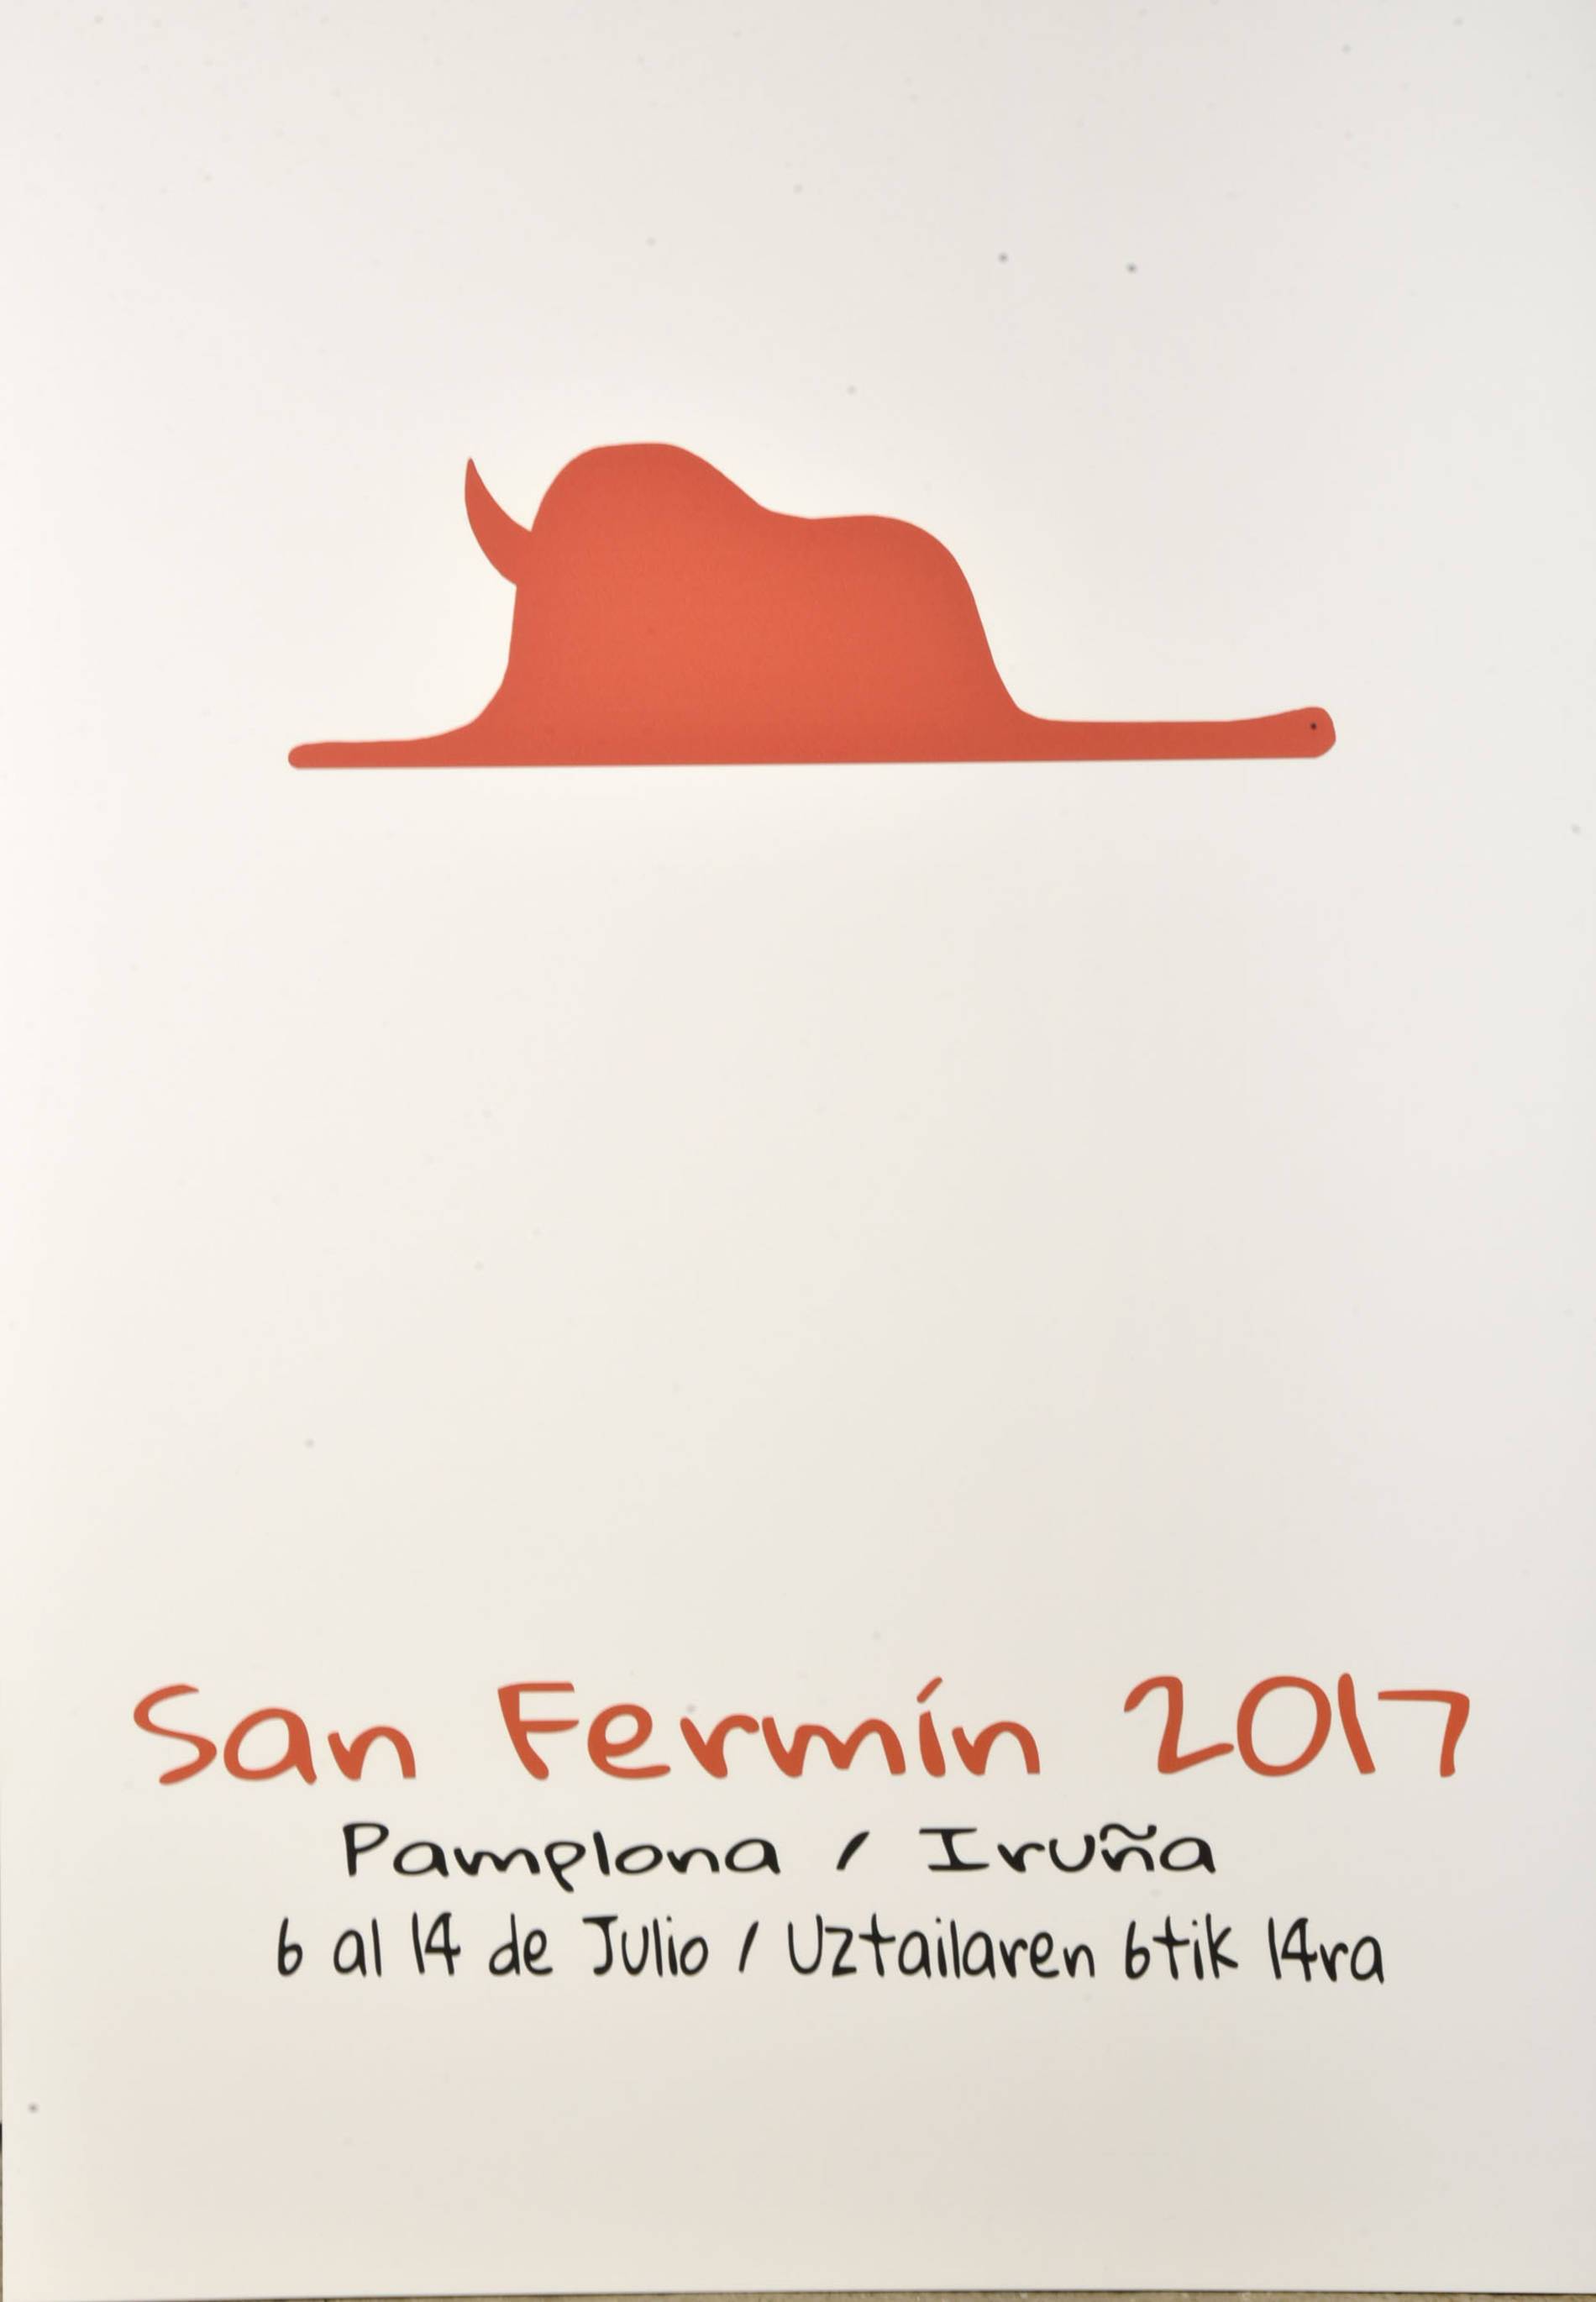 Carteles finalistas de San Fermín 2017 (8/9) - Fotos de los ocho finalistas del concurso de carteles San Fermín 2017 - Pamplona - null